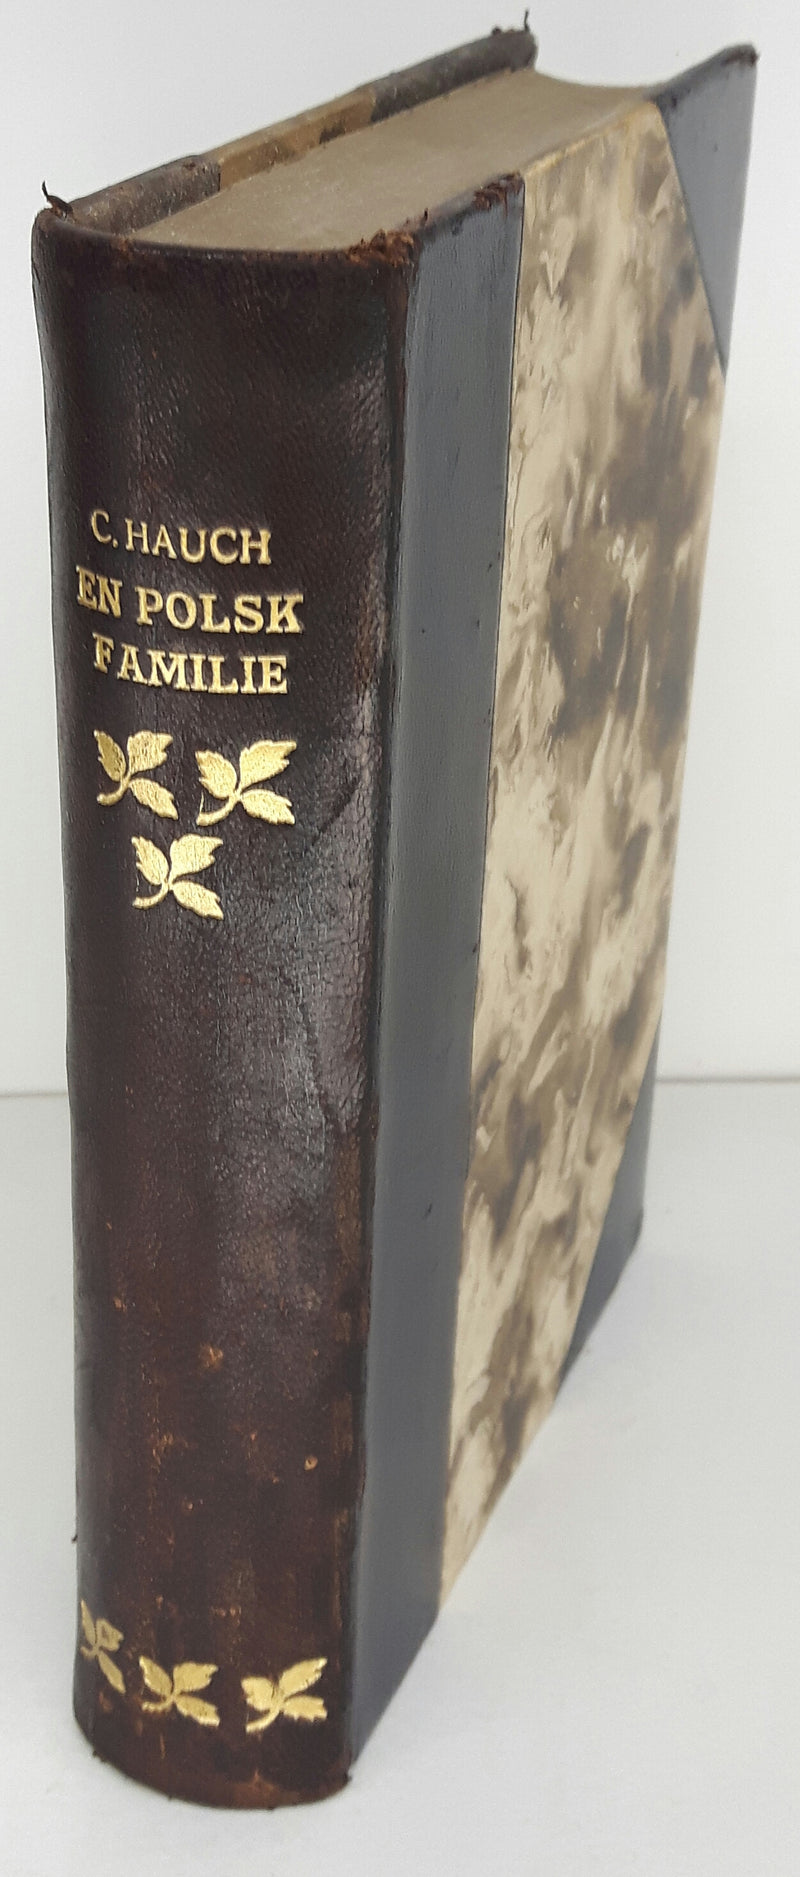 En polsk familie